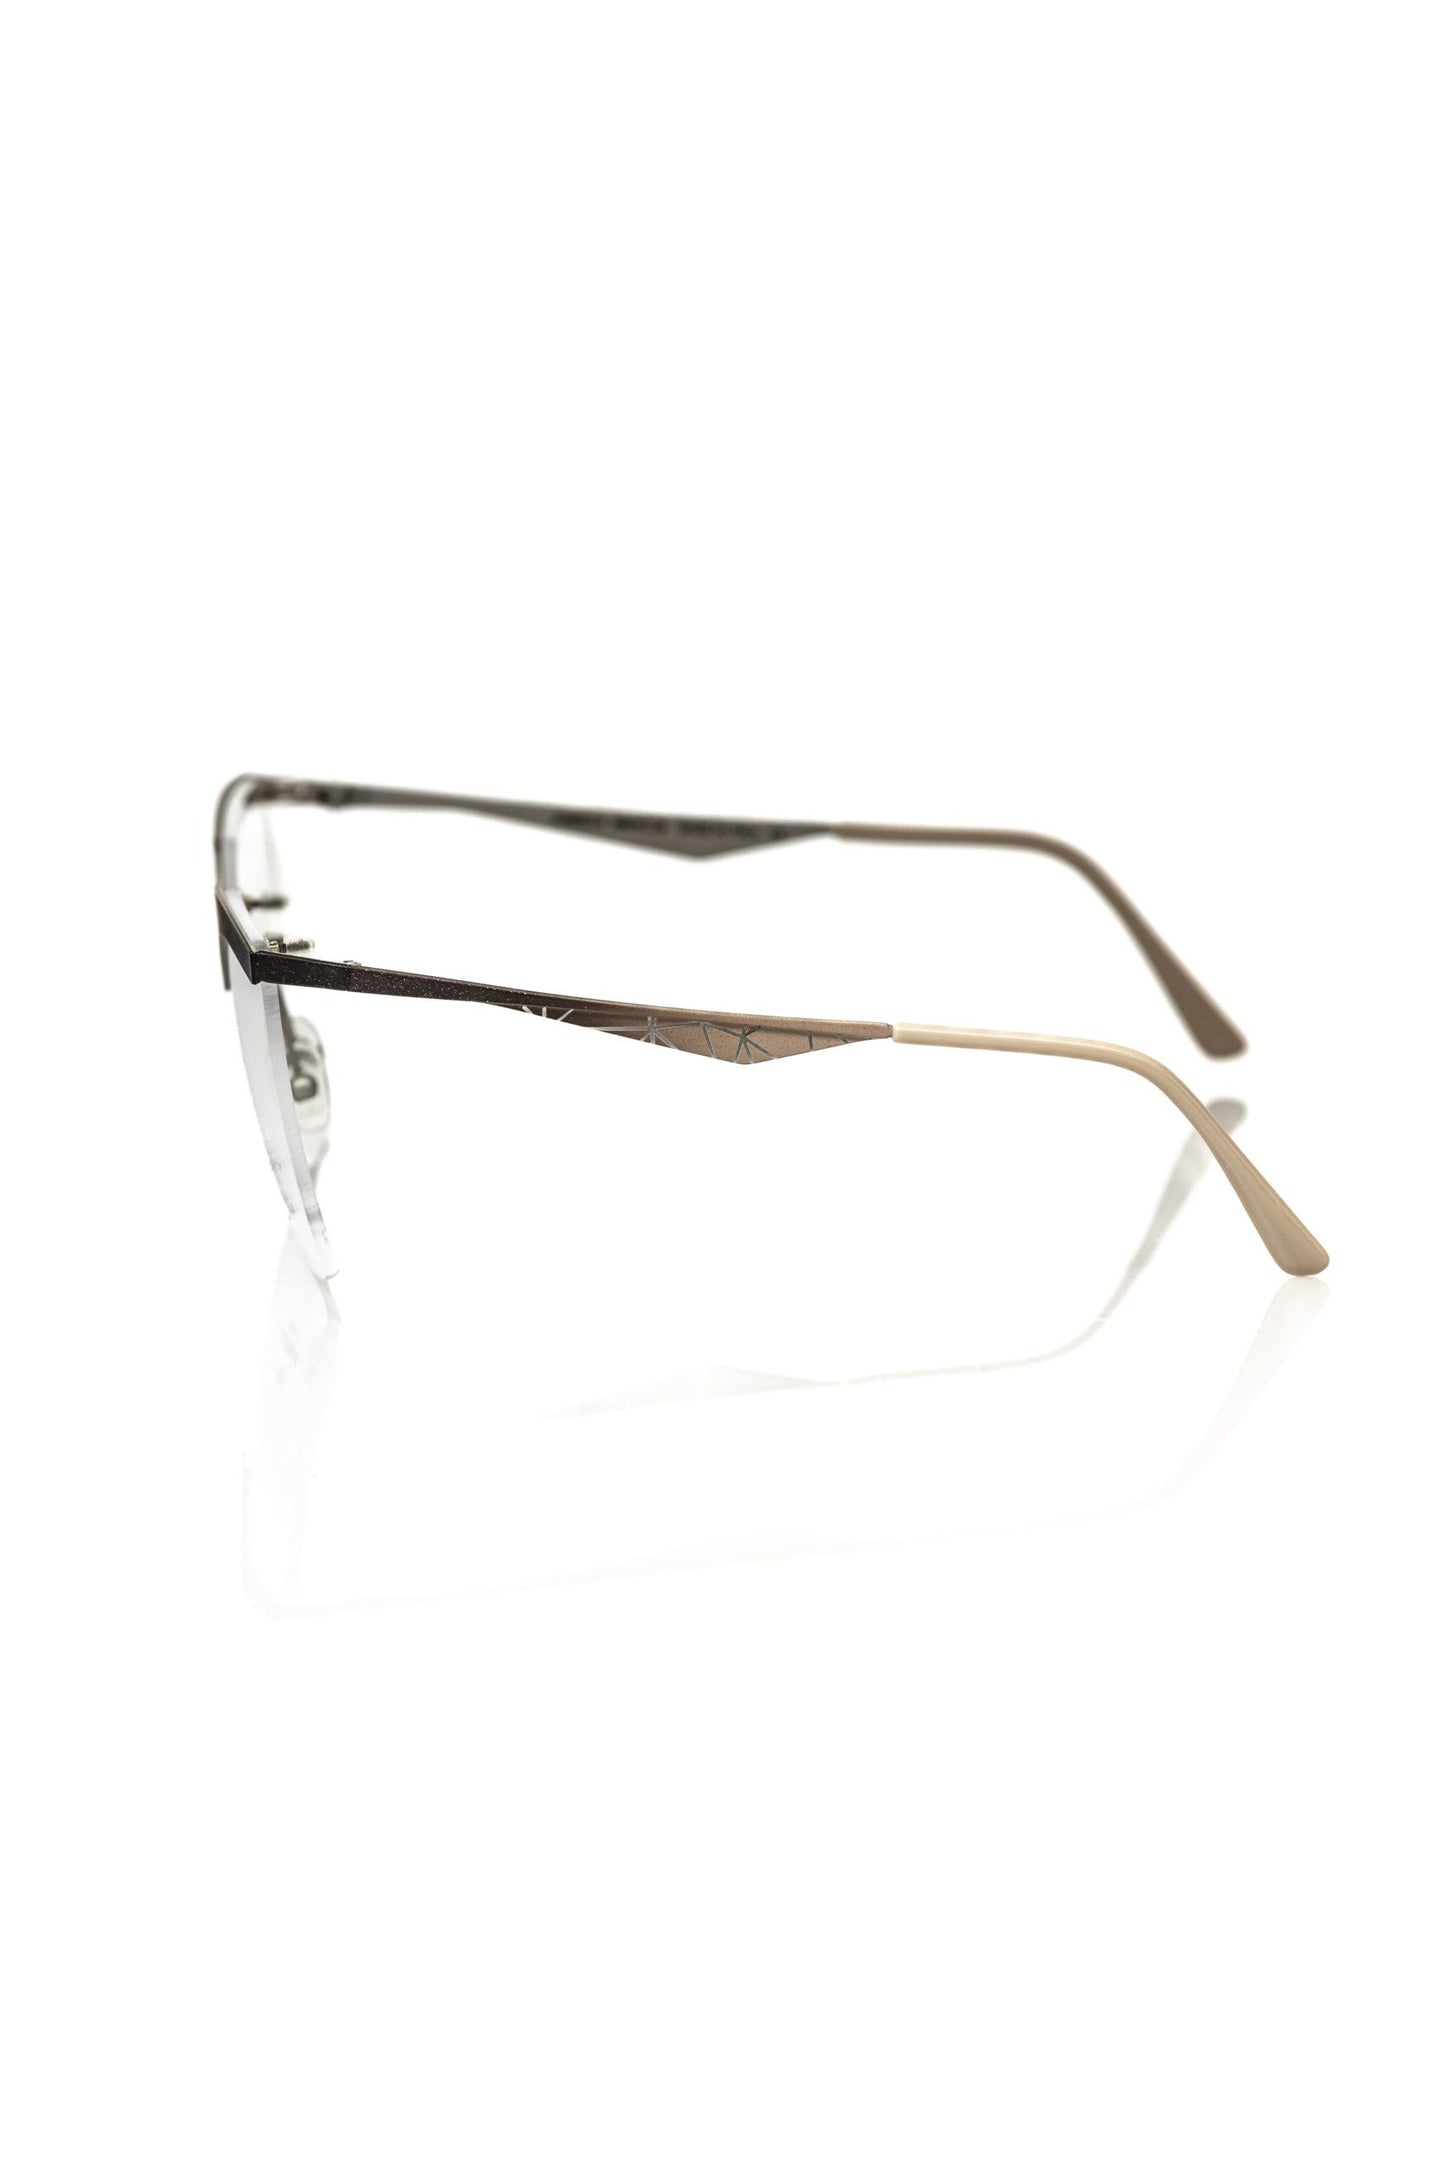 Frankie Morello Glittering Gold Clubmaster Eyeglasses